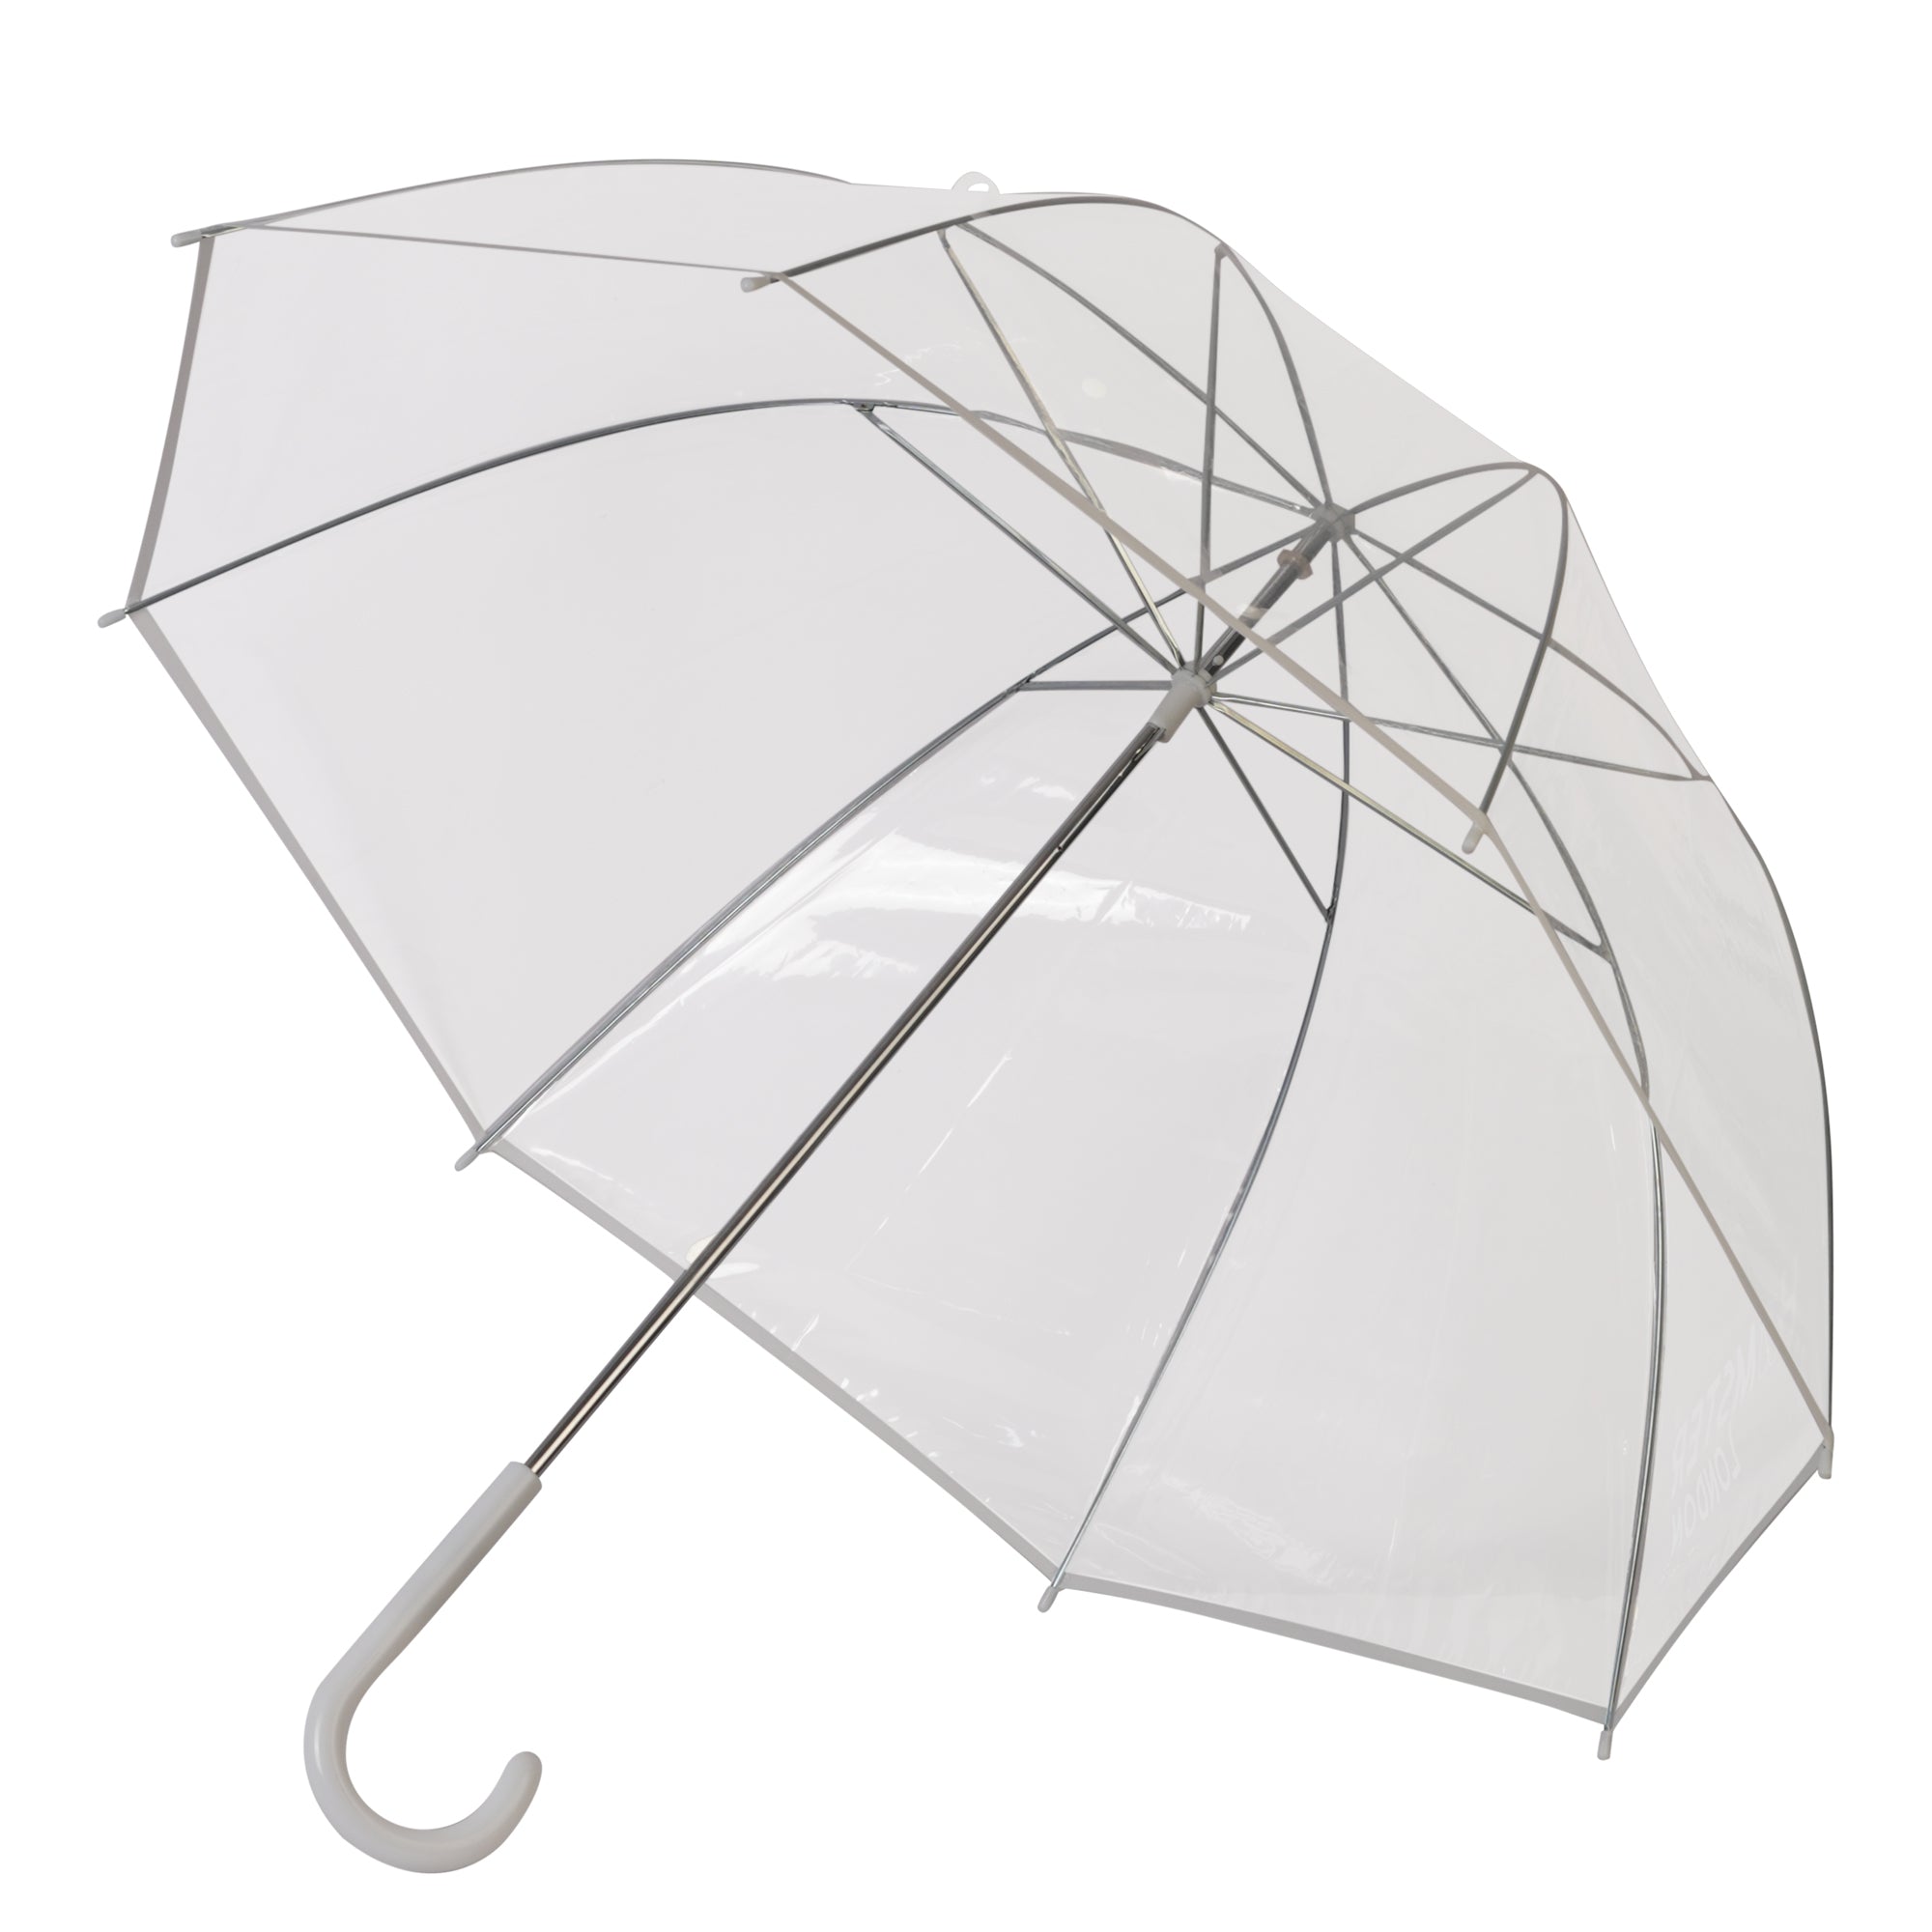 Hamster London Transparent Umbrella White